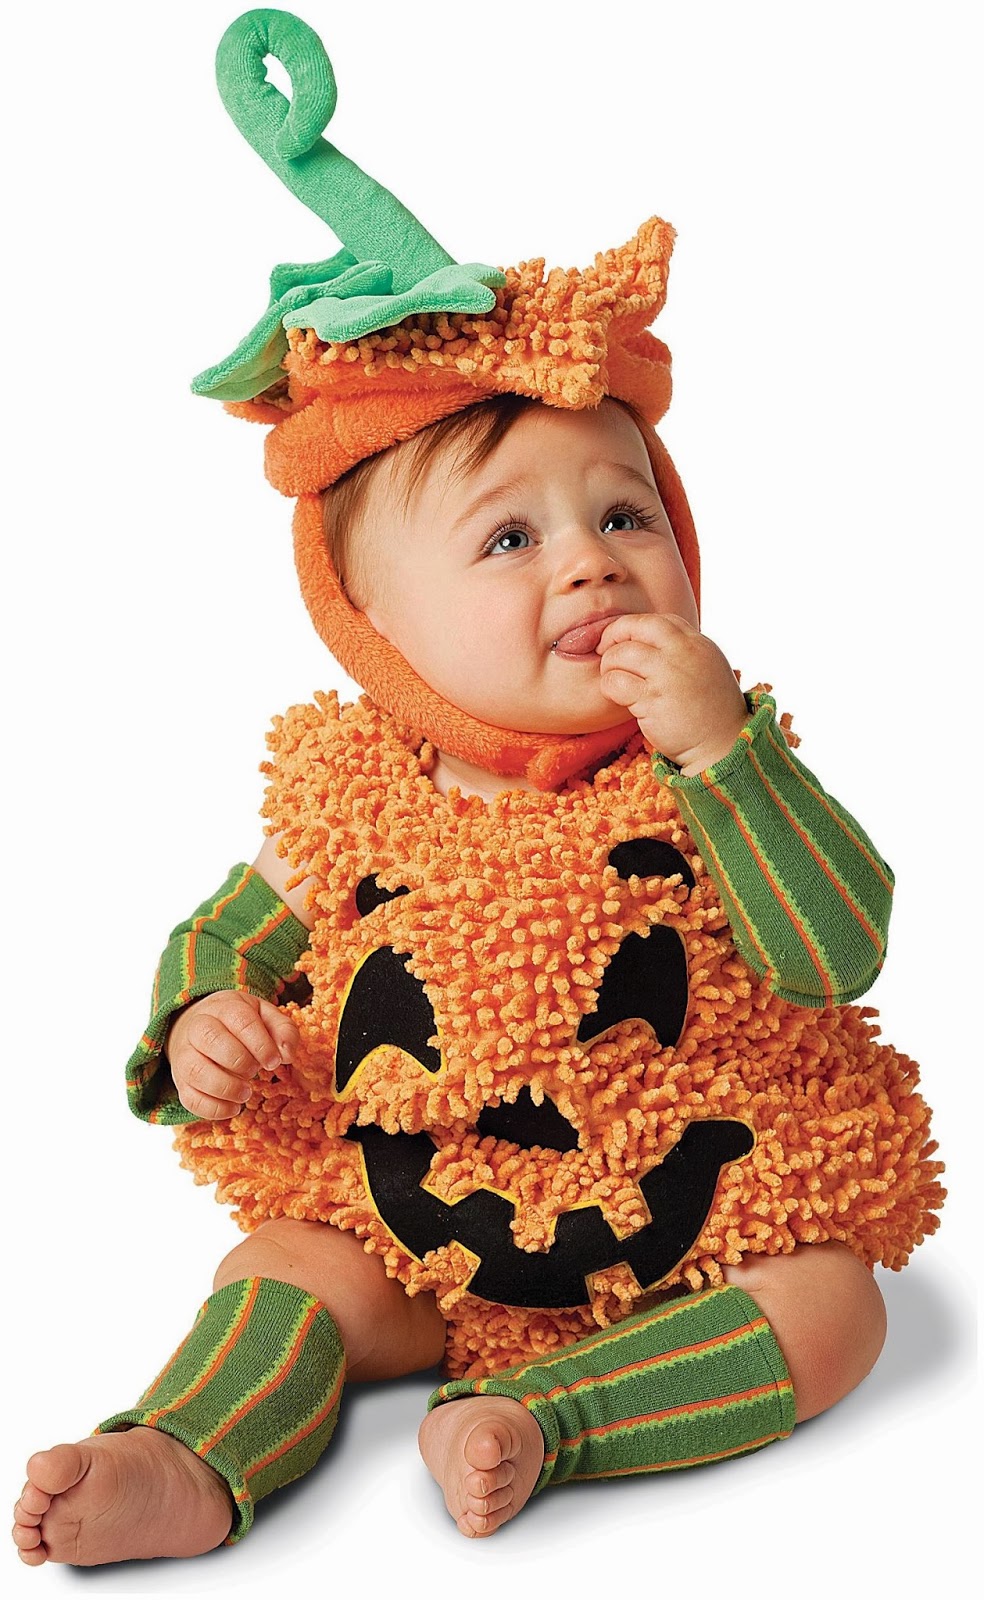 Best Halloween Costume Deals: Cute and fancy kids costumes